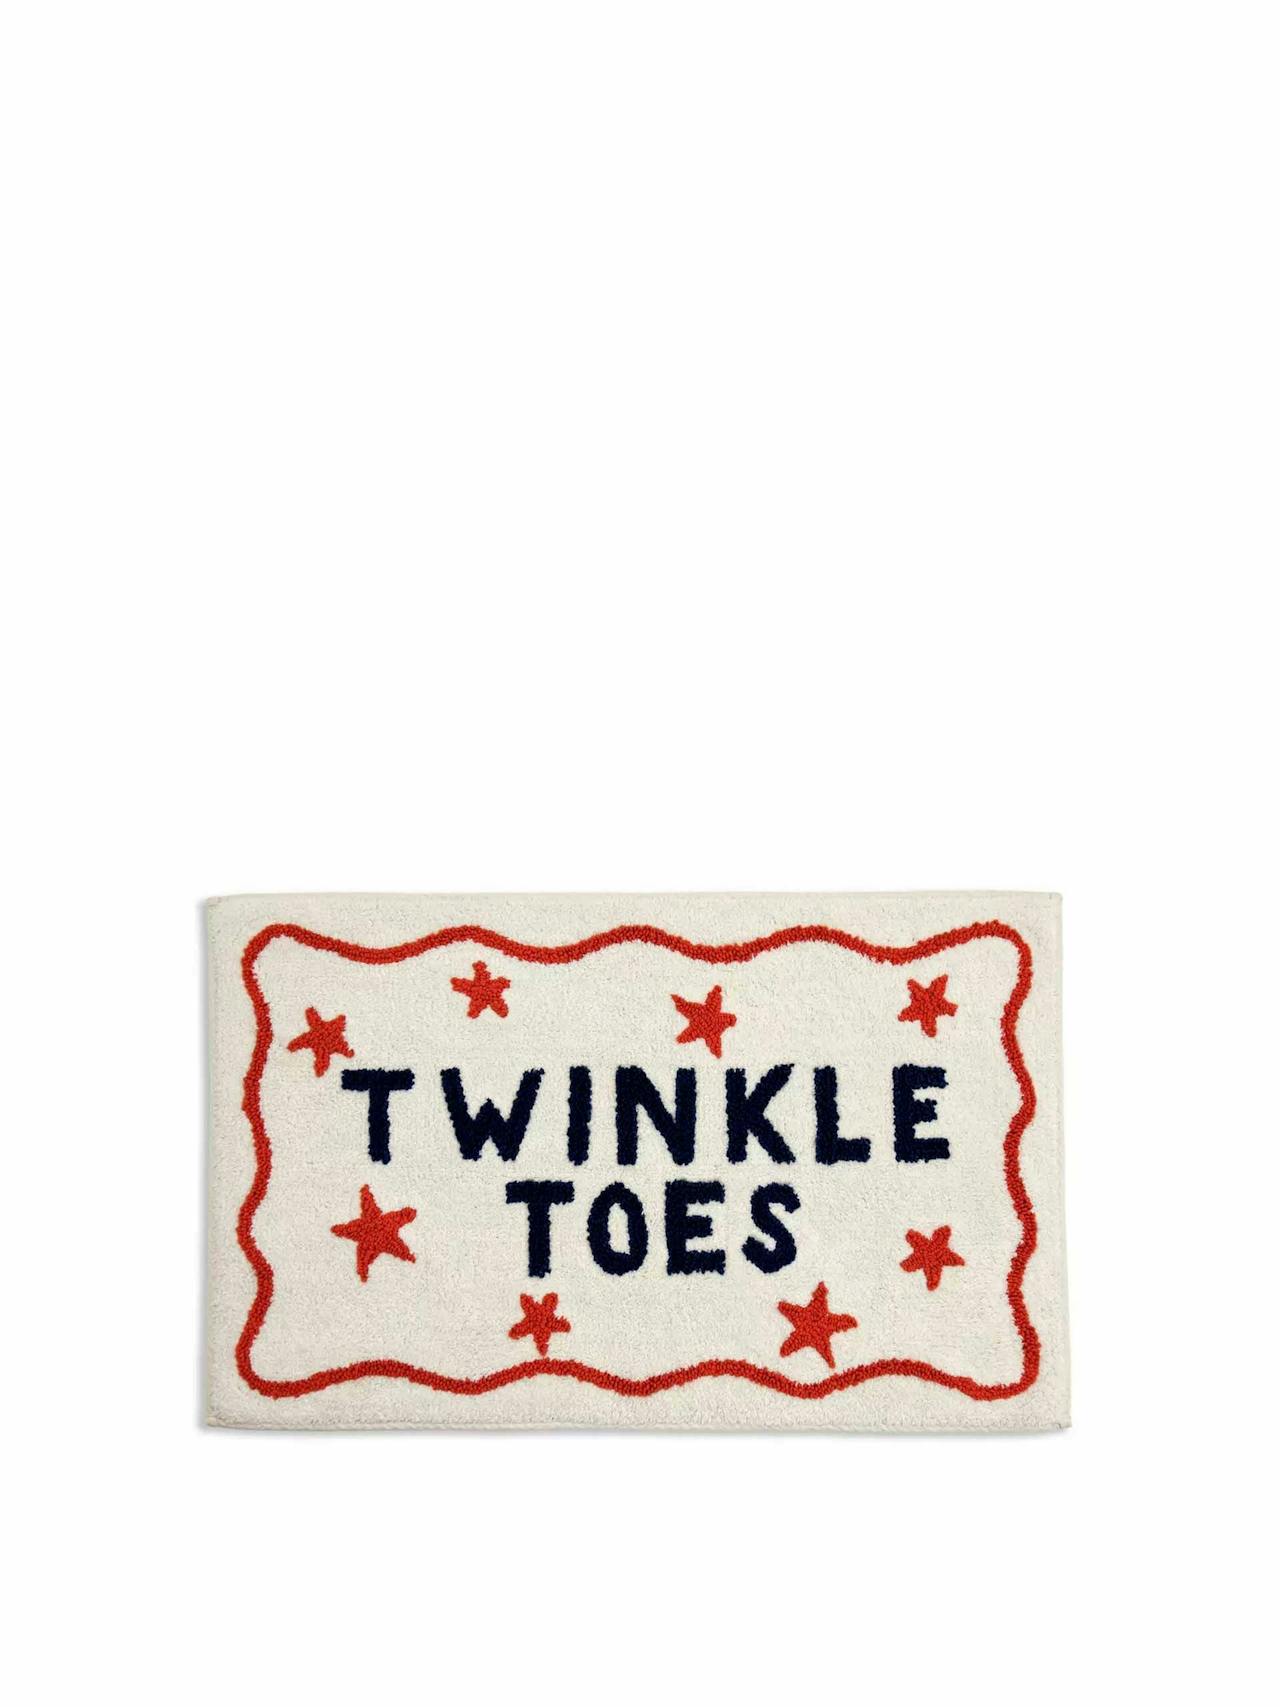 Twinkle toes bath mat